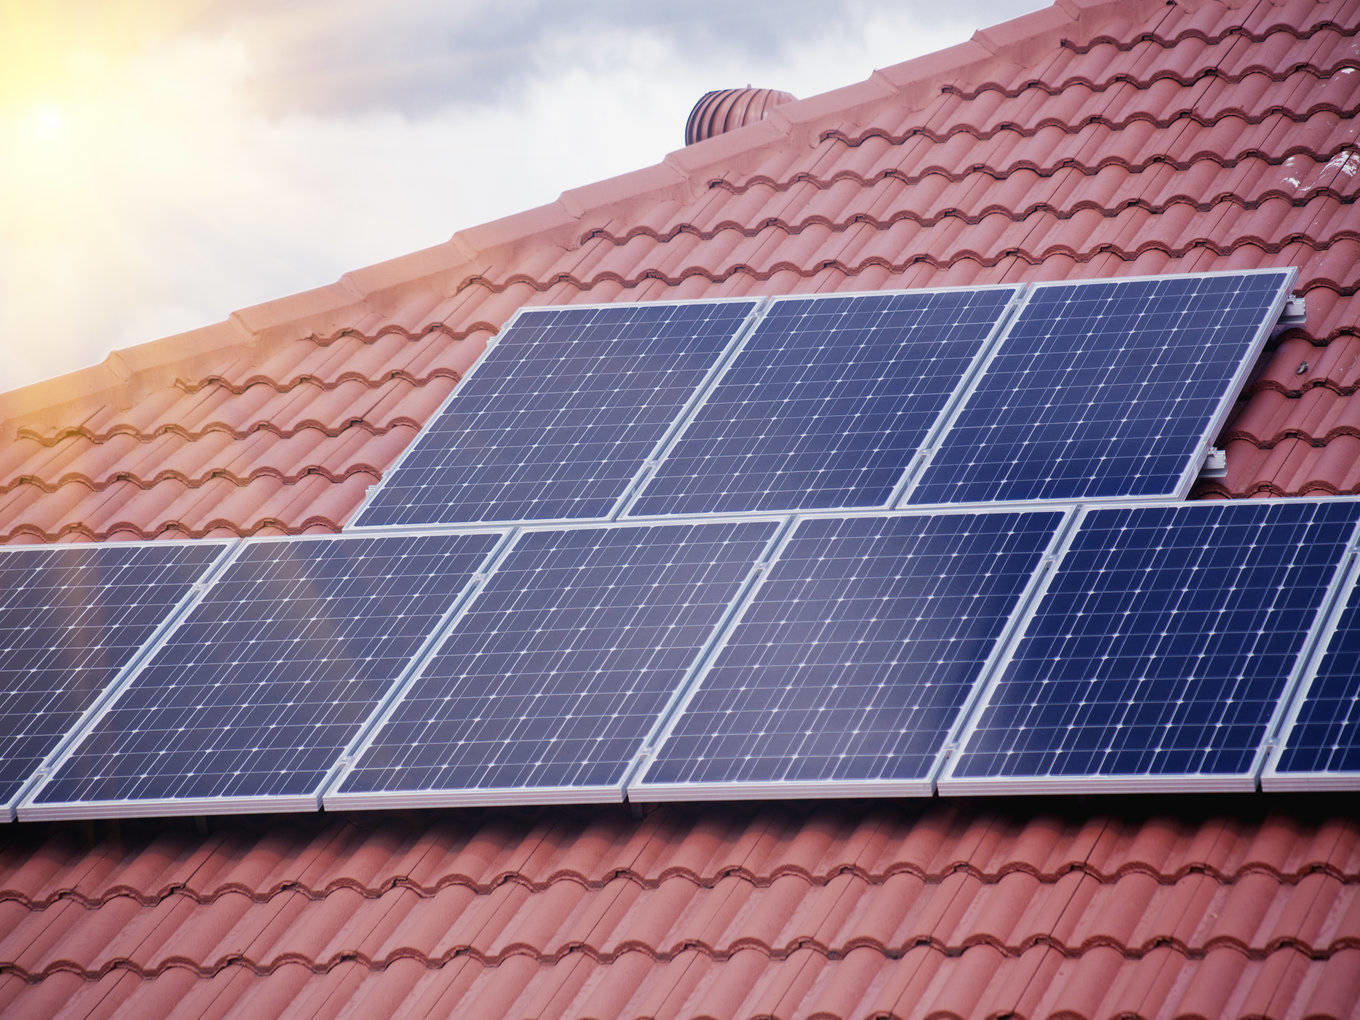 Will Maharashtra’s Net Billing System Affect India's Solar Power Startups?